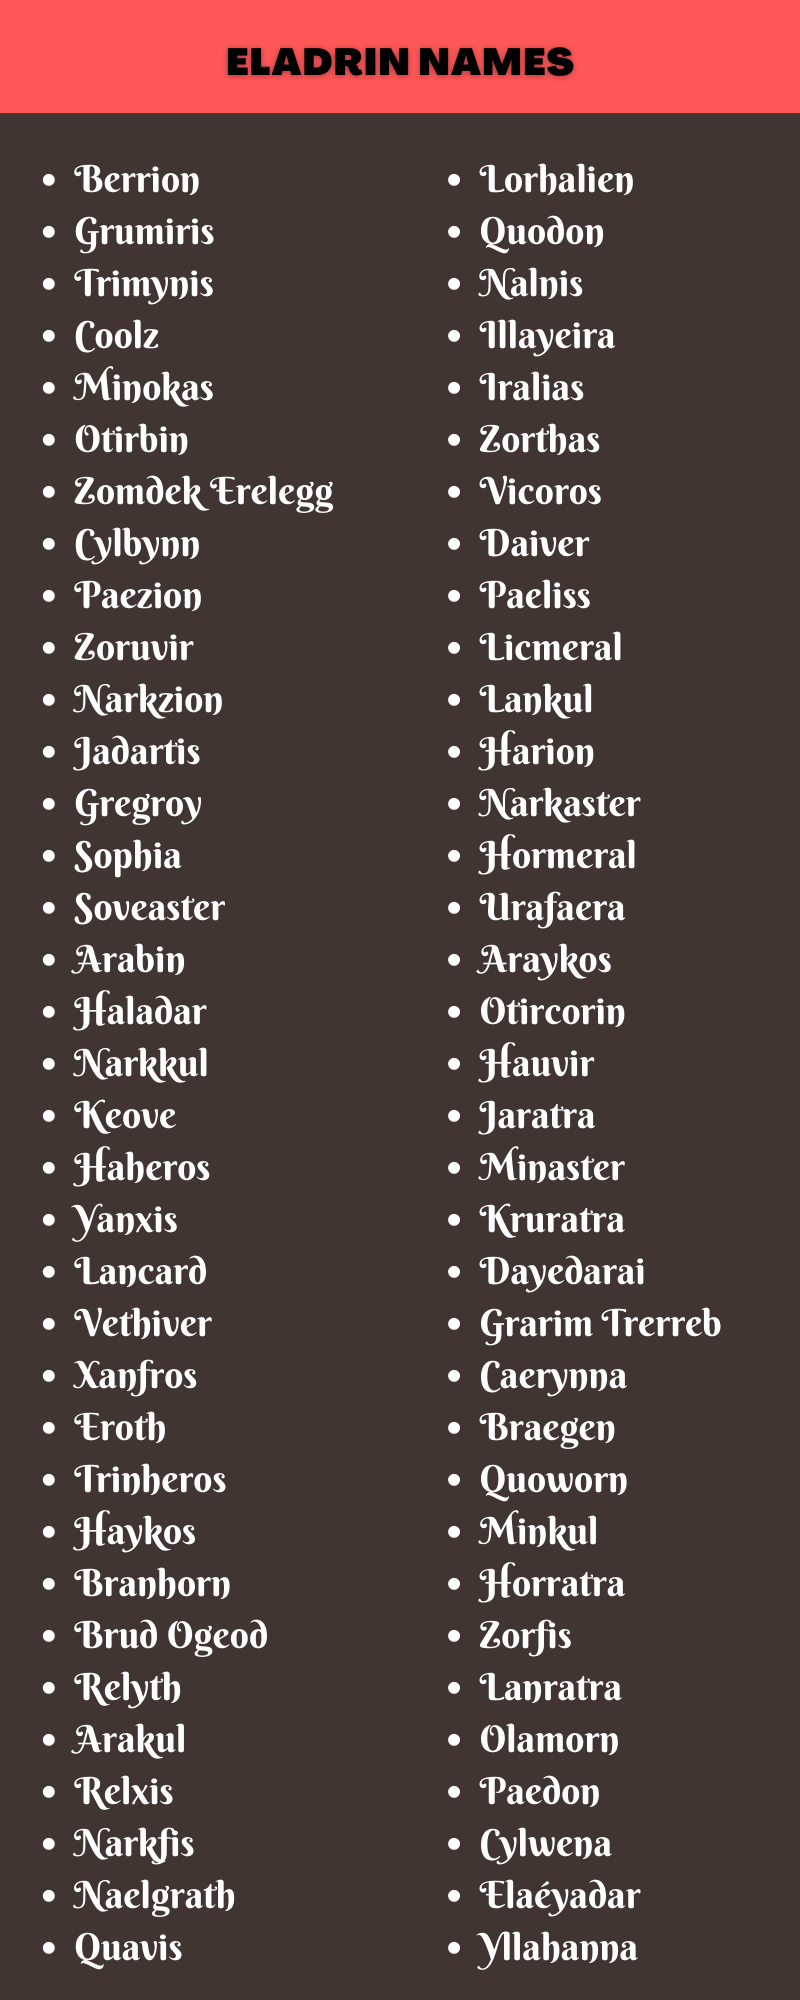 Eladrin Names